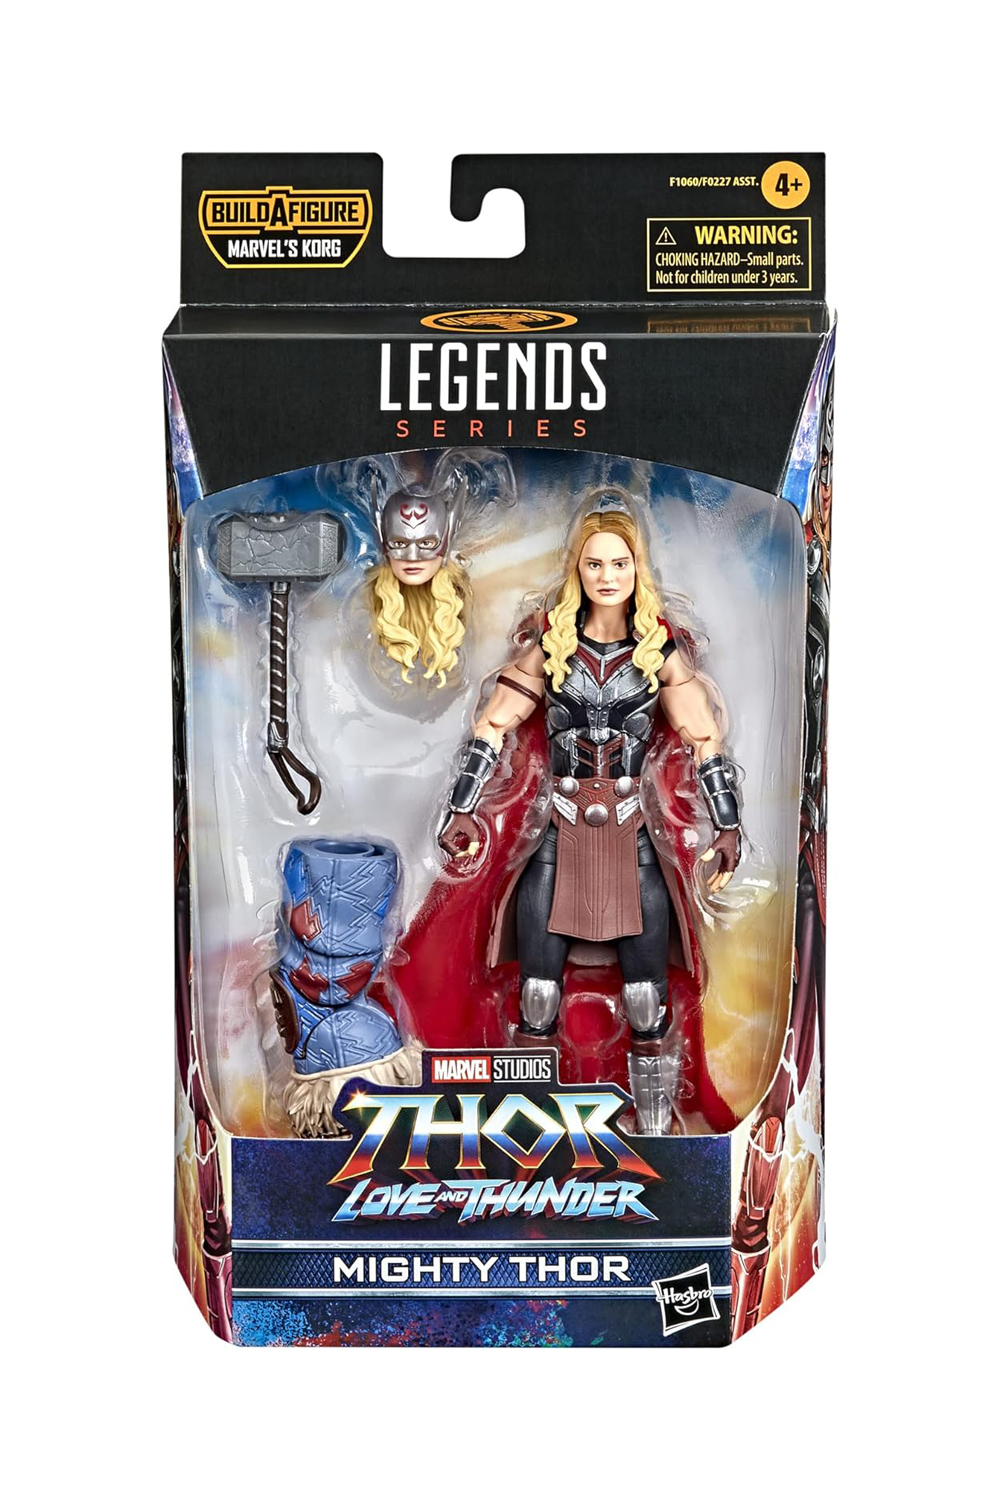 El MARTILLO de MIGHTY THOR! - UNBOXING Mjolnir Marvel Legends de Thor: Love  and Thunder 